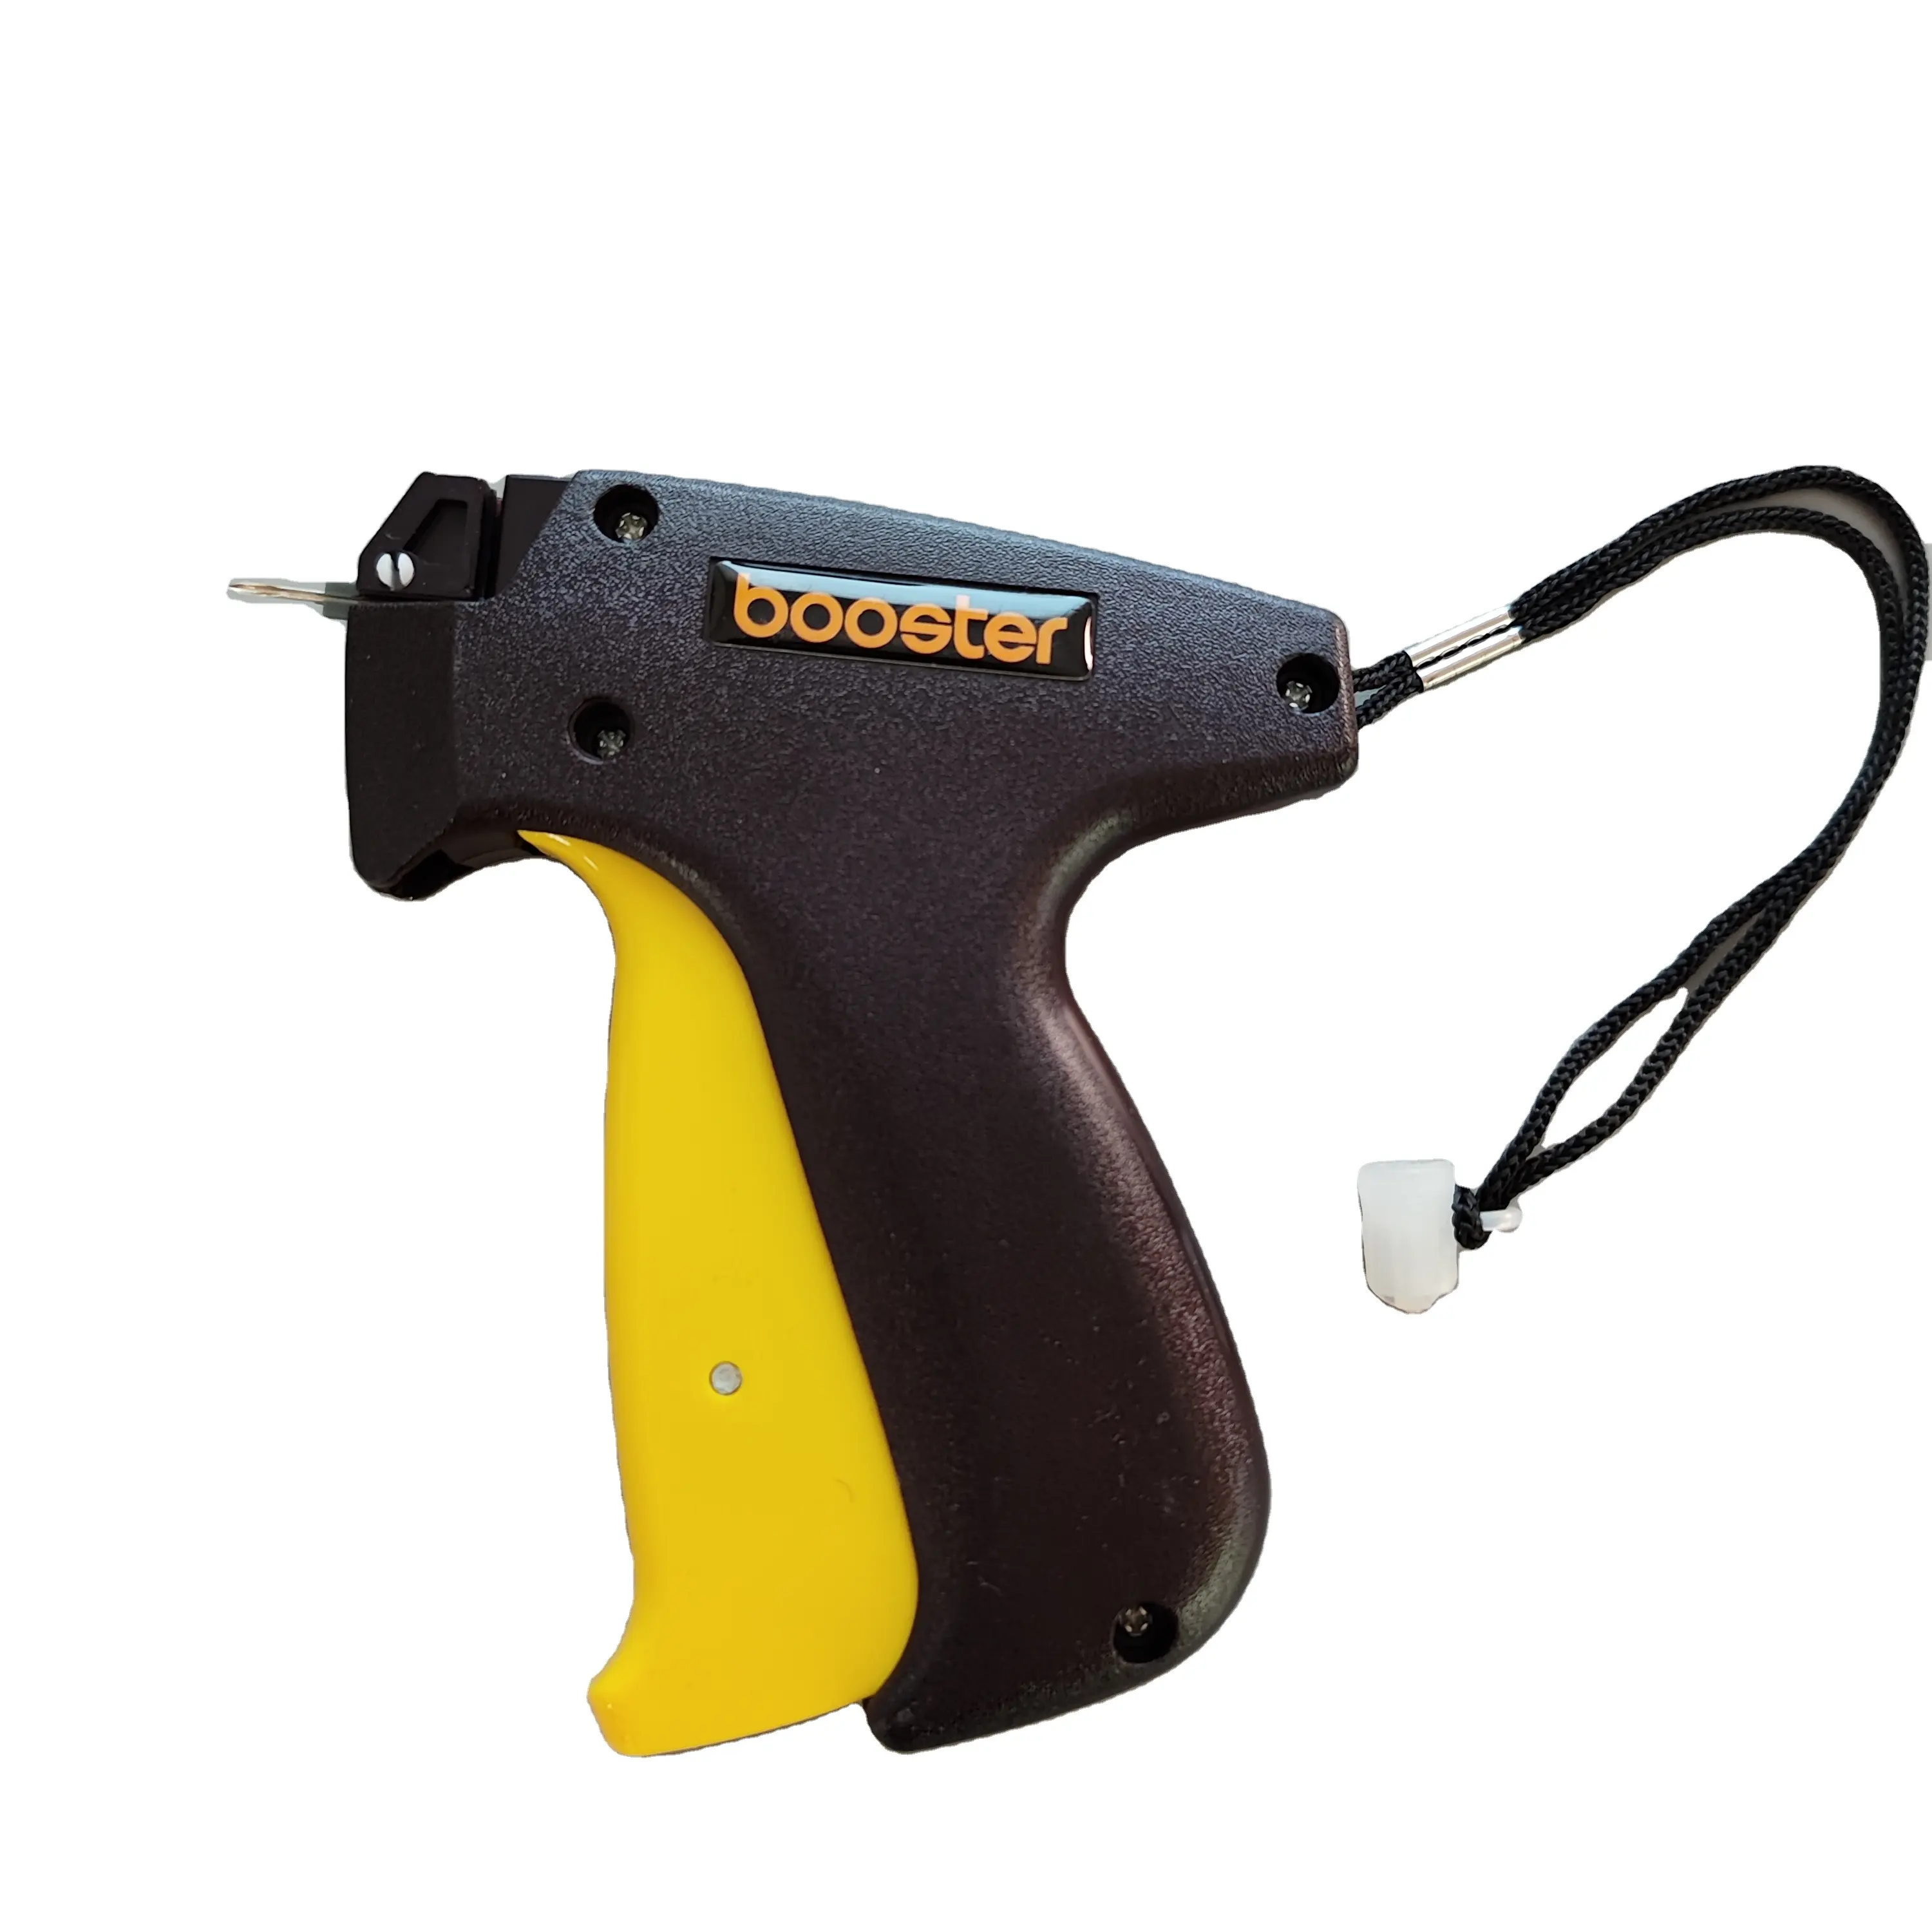 booster pistola de ropa Garments tagging gun micro tag gun works with 3.4-5.4mm fine nylon micro tag barbs